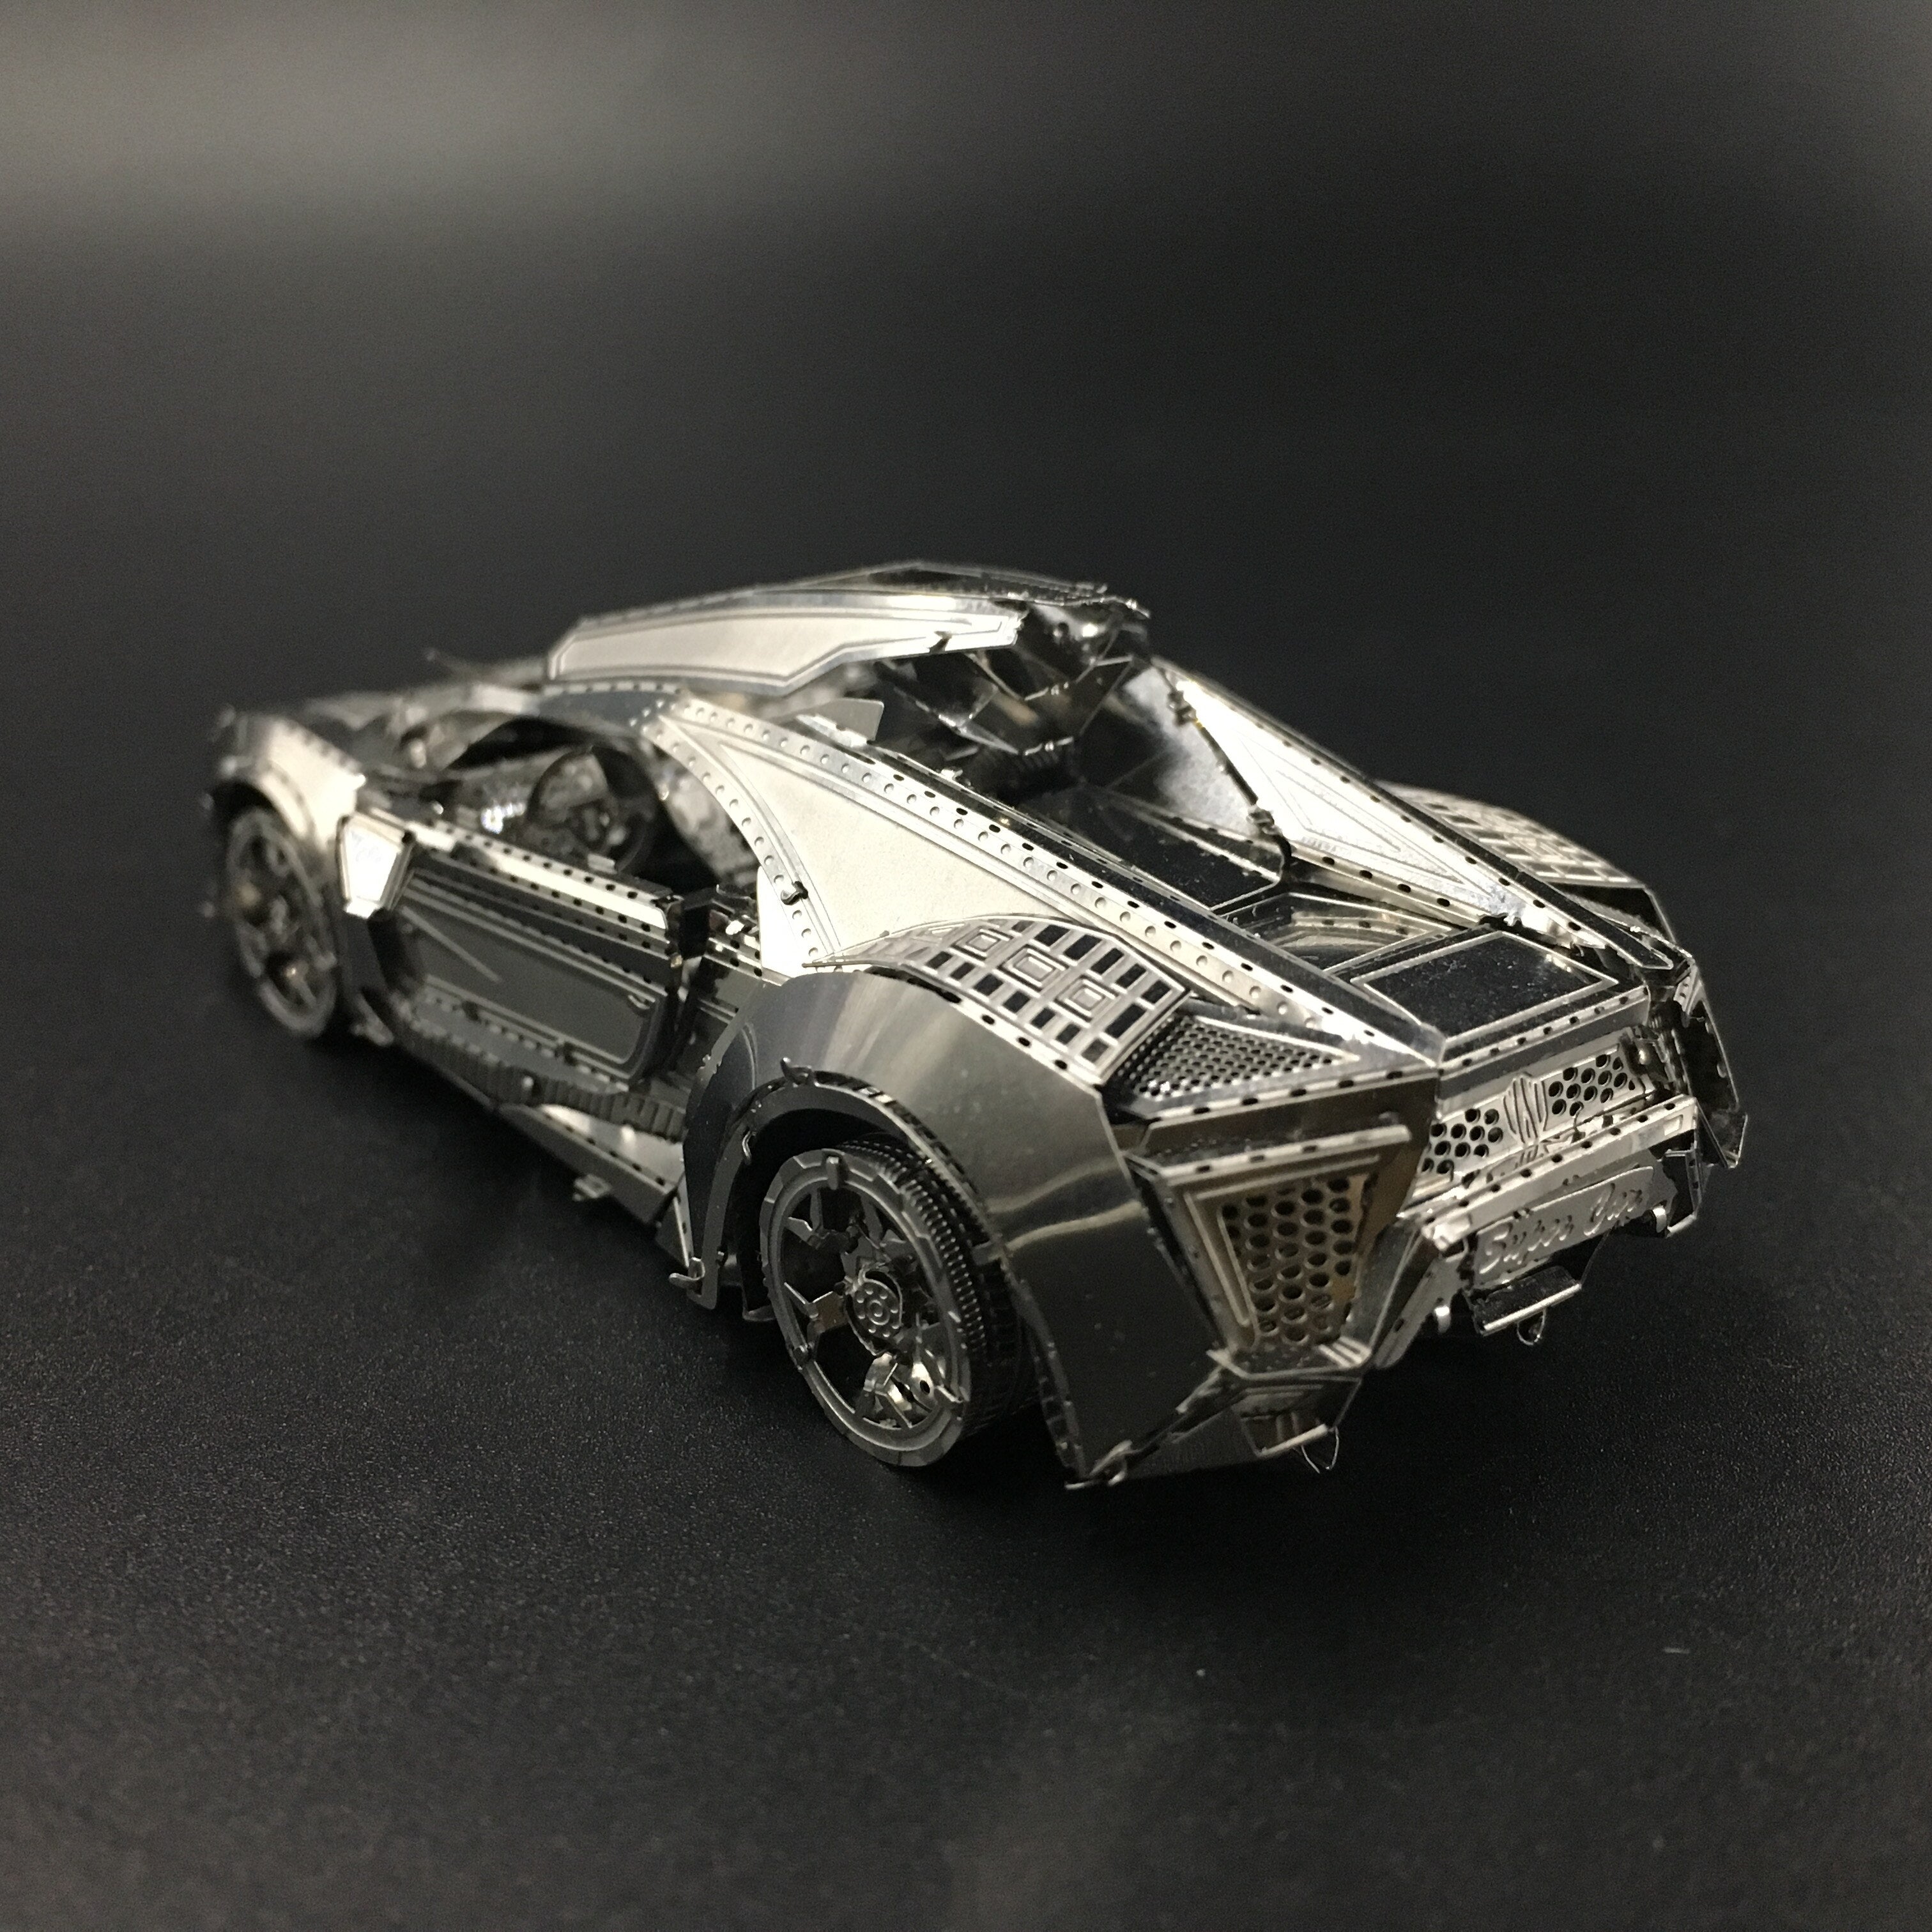 METAL OCEAN 3D Metal Model Kit - Hypersport Racing Car